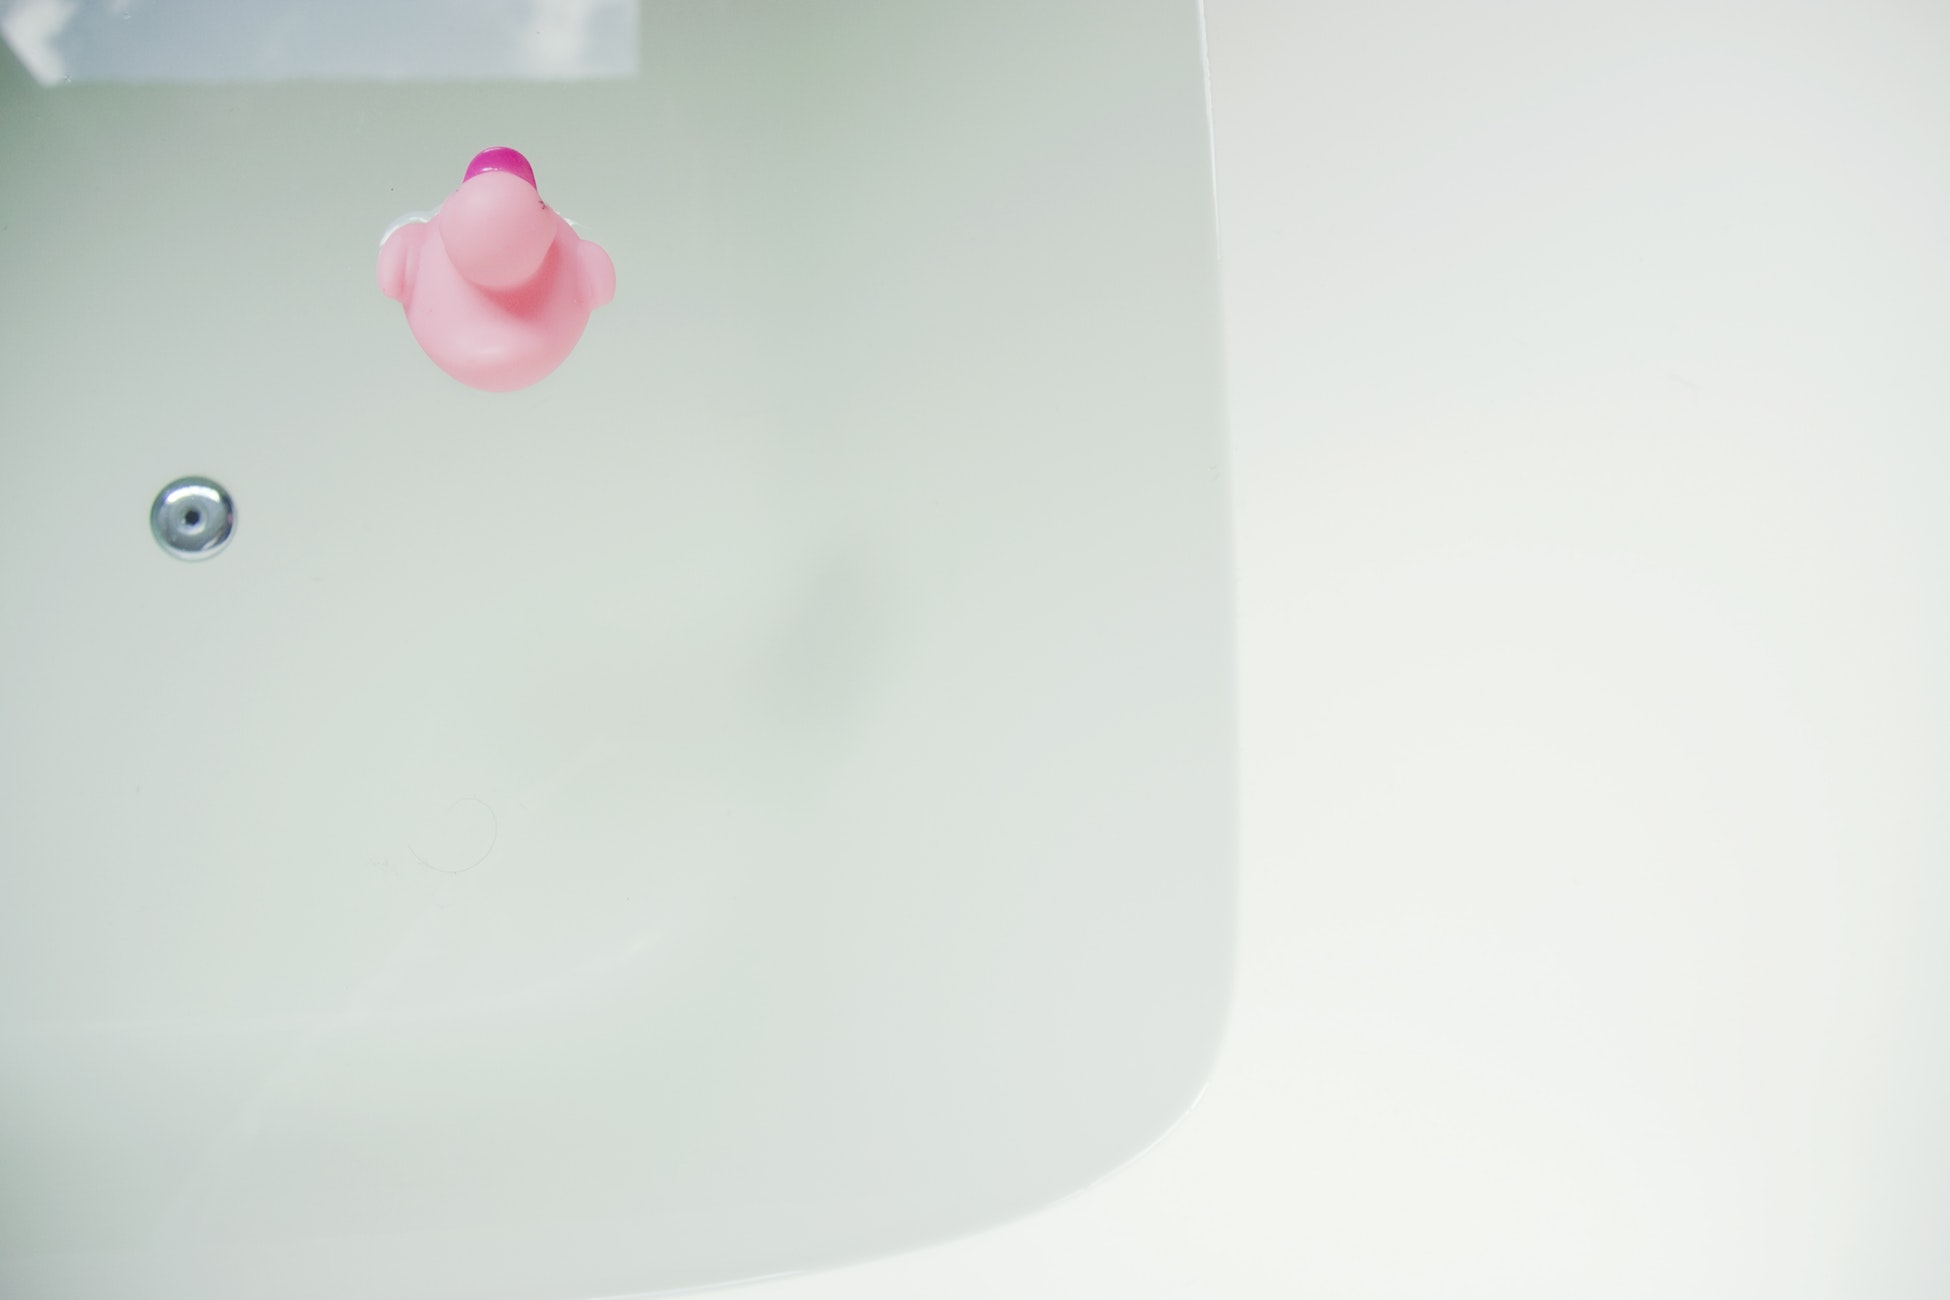 Pink rubber duck in bath tub.